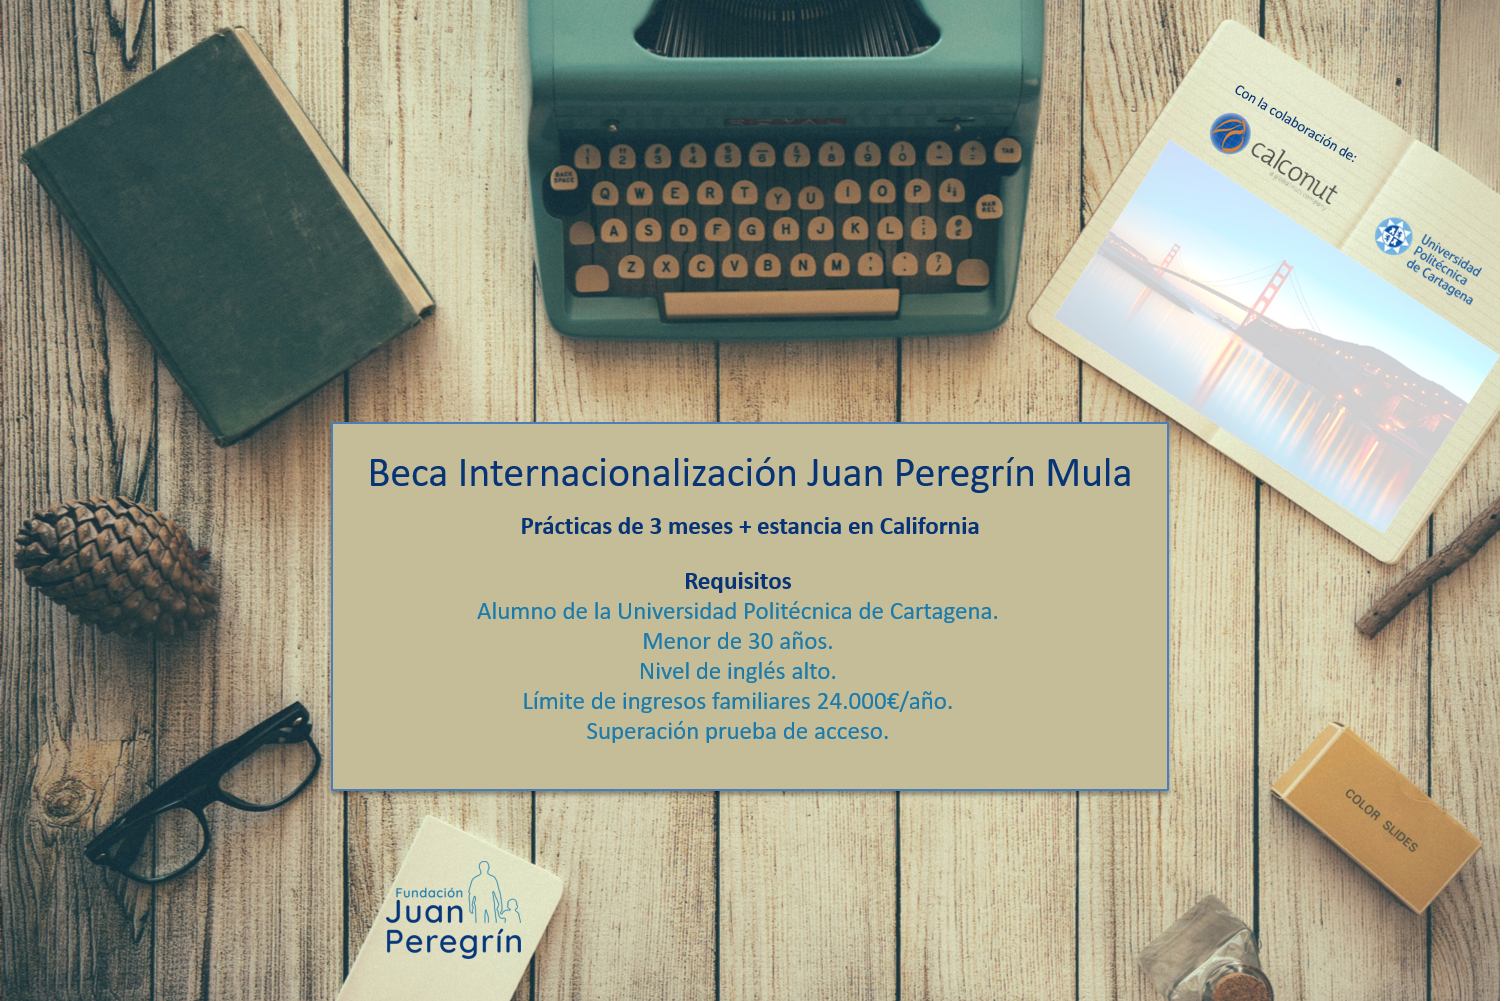 beca-internacionalizacion-juan-peregrin-mula-universidad-politecnica-cartagena